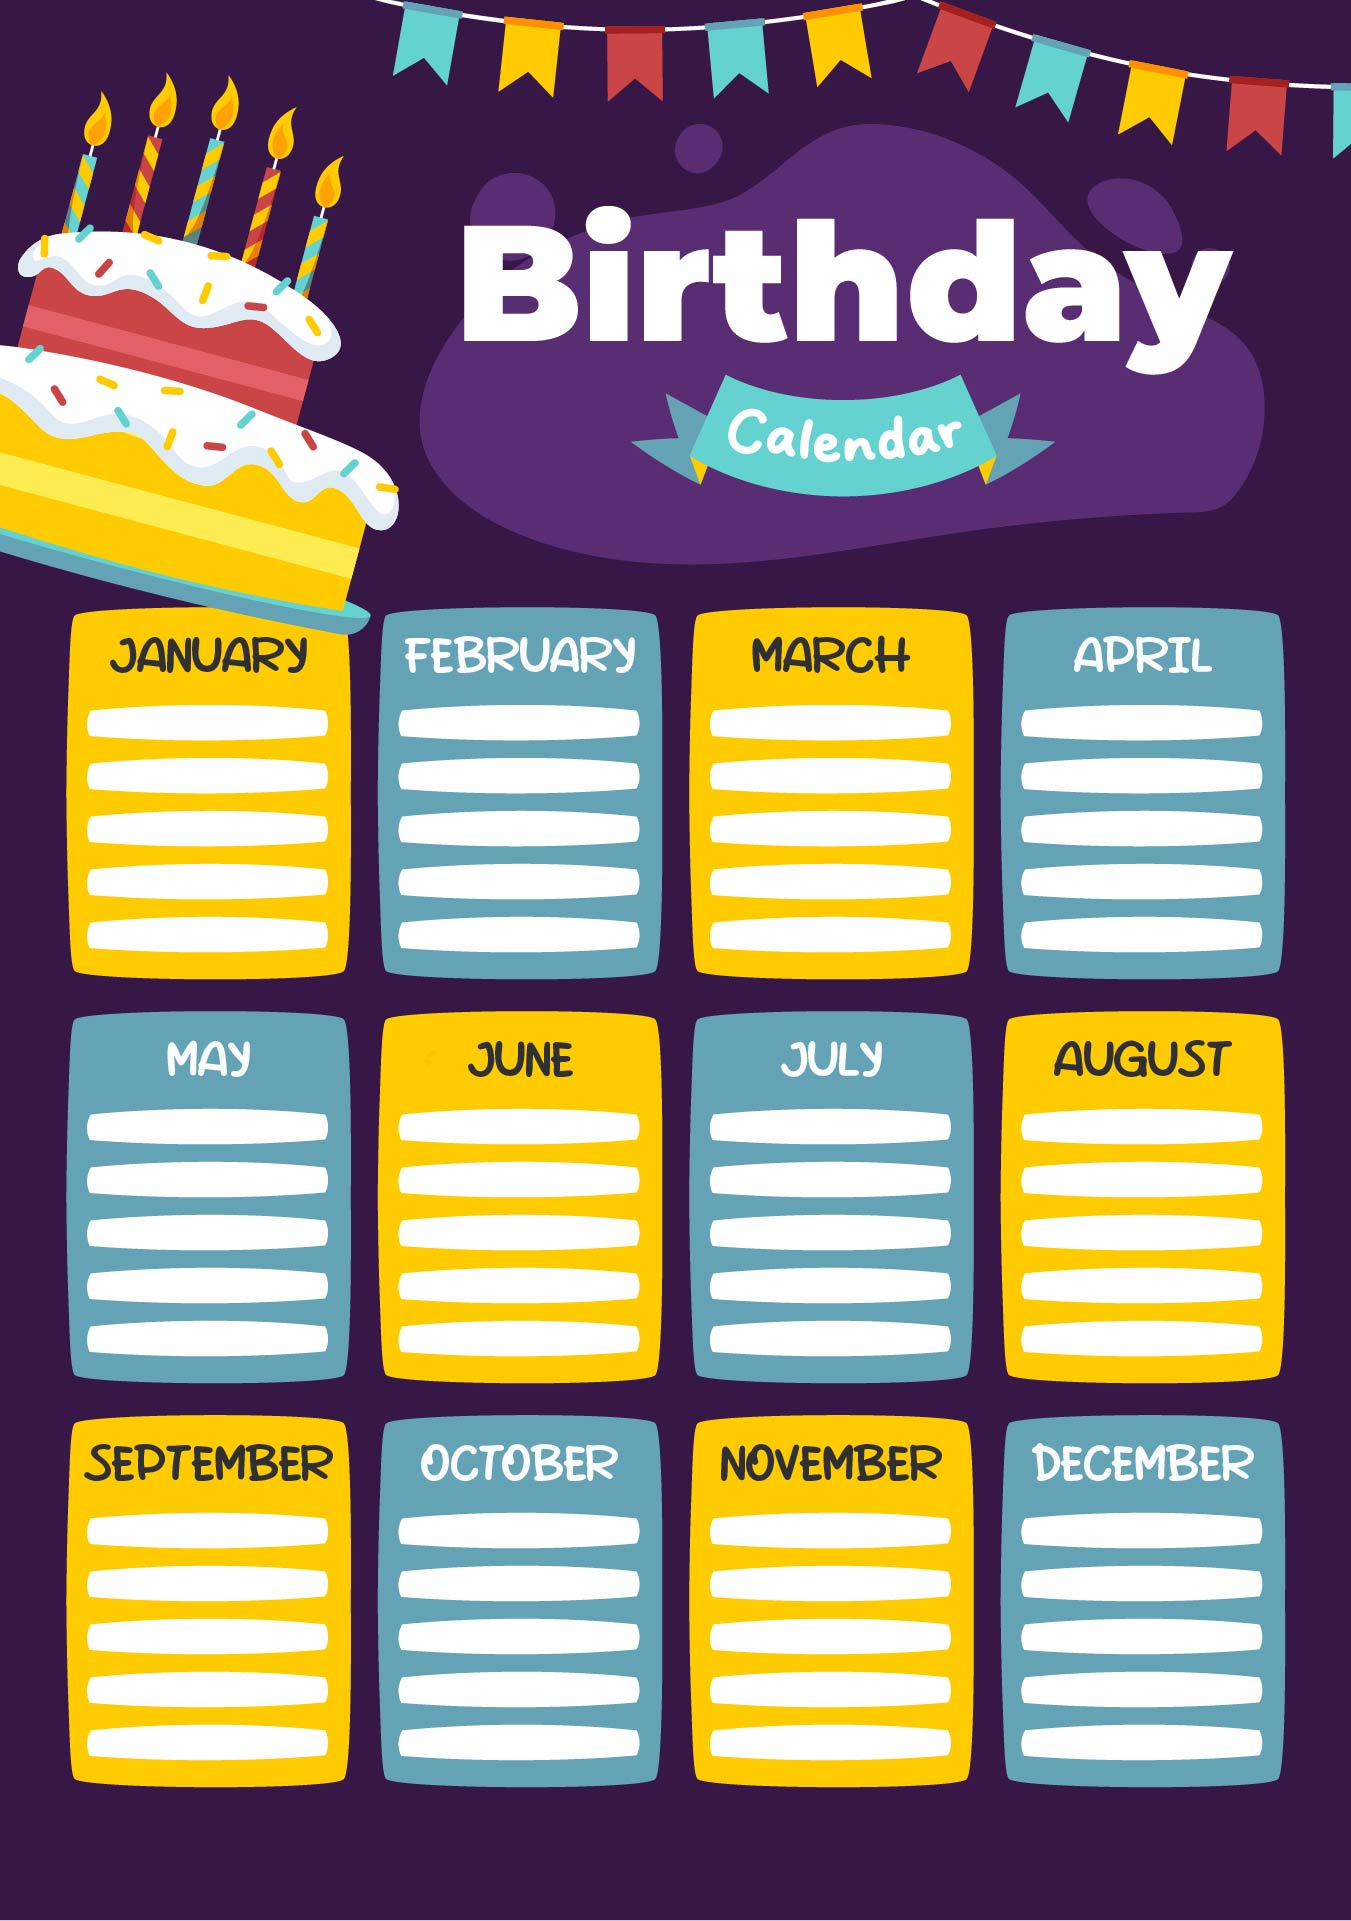 6 Best Images of Classroom Birthday Calendar Printable Classroom